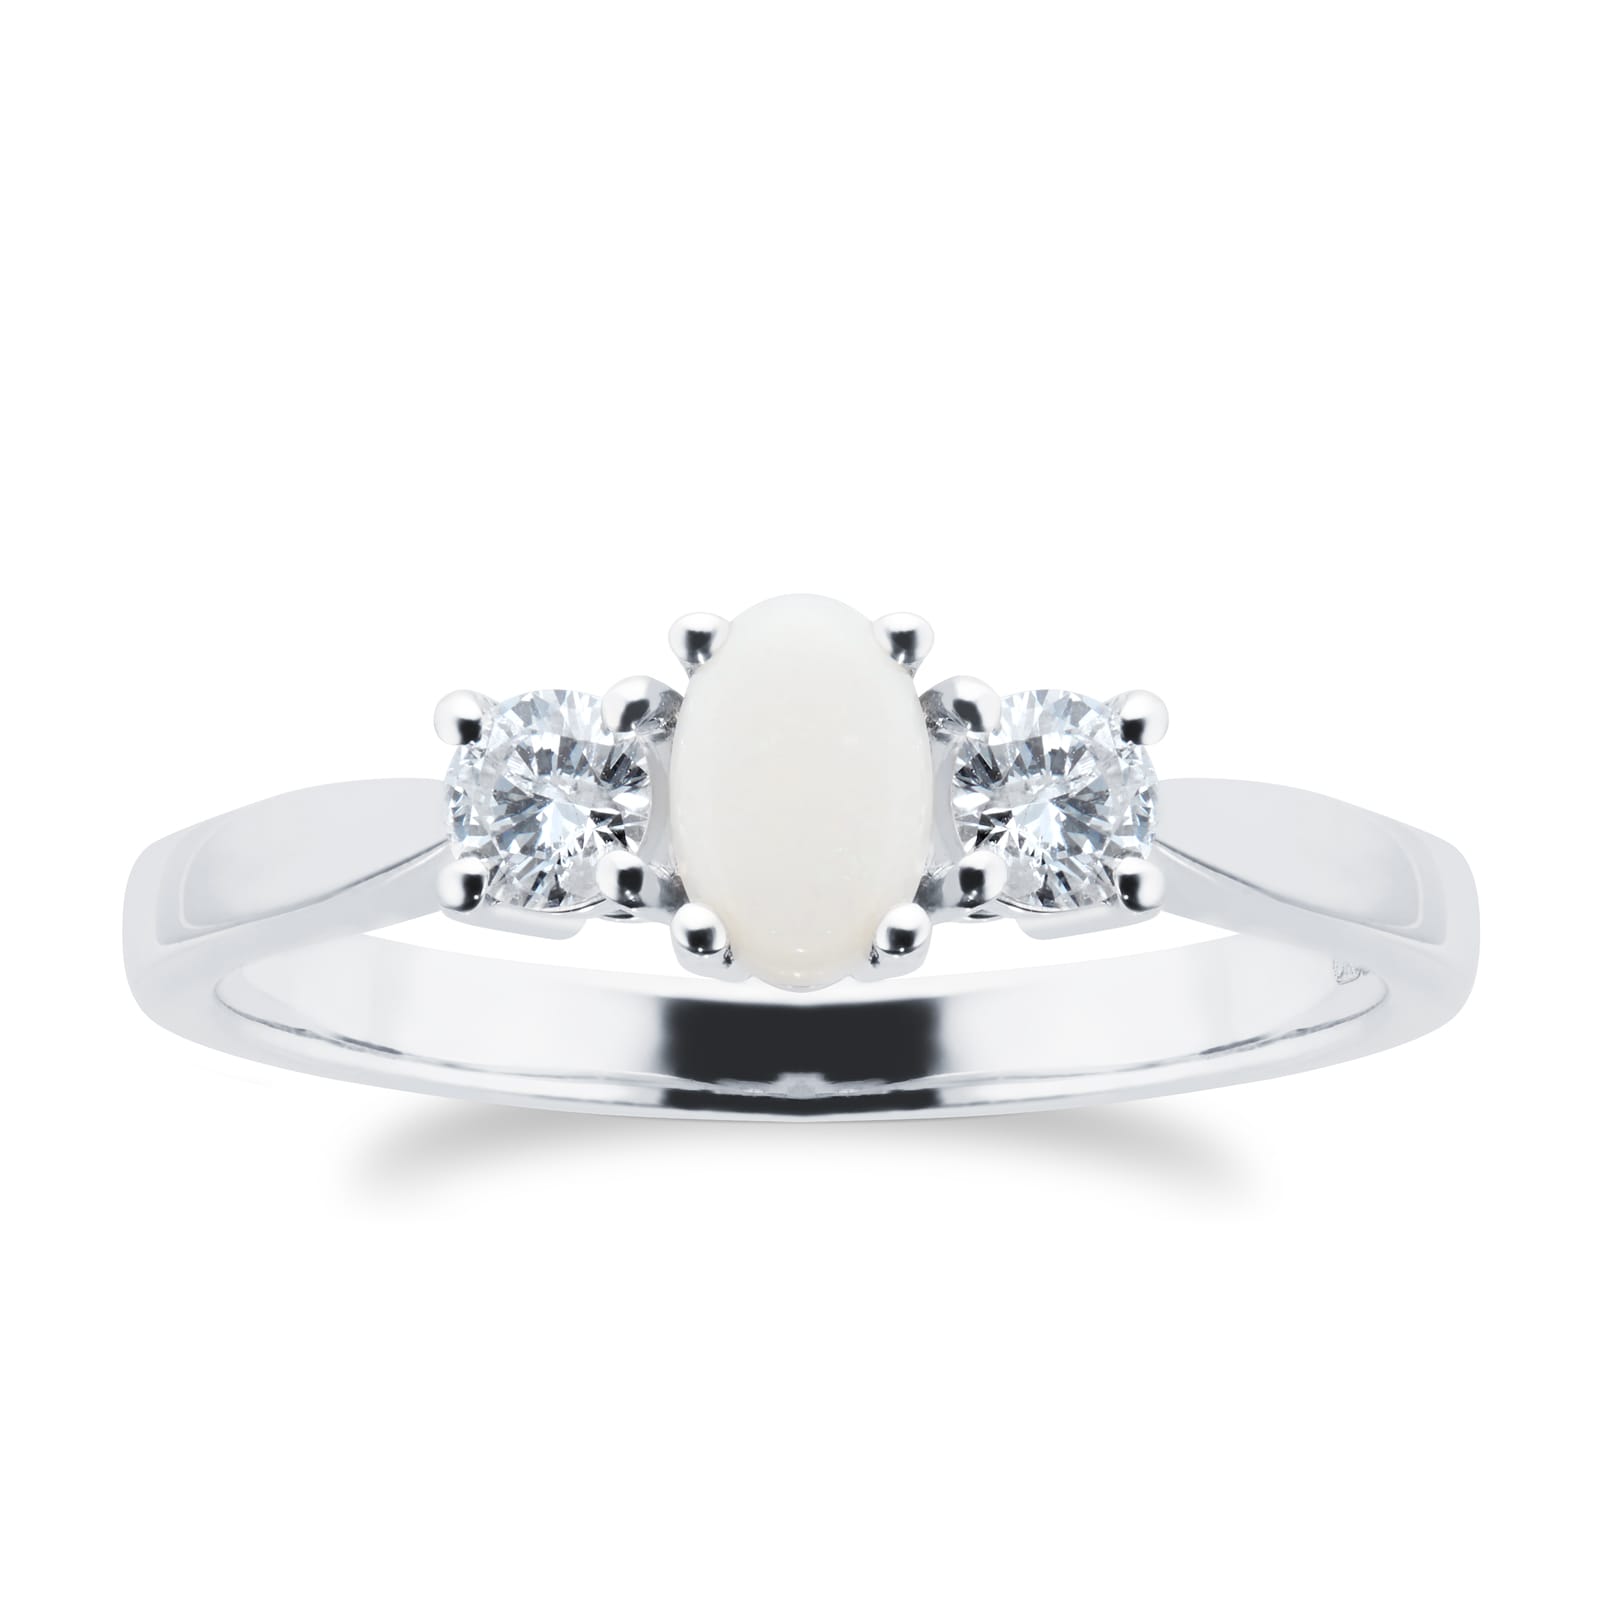 9ct White Gold 3 Stone Opal & Diamond Ring - Ring Size J.5